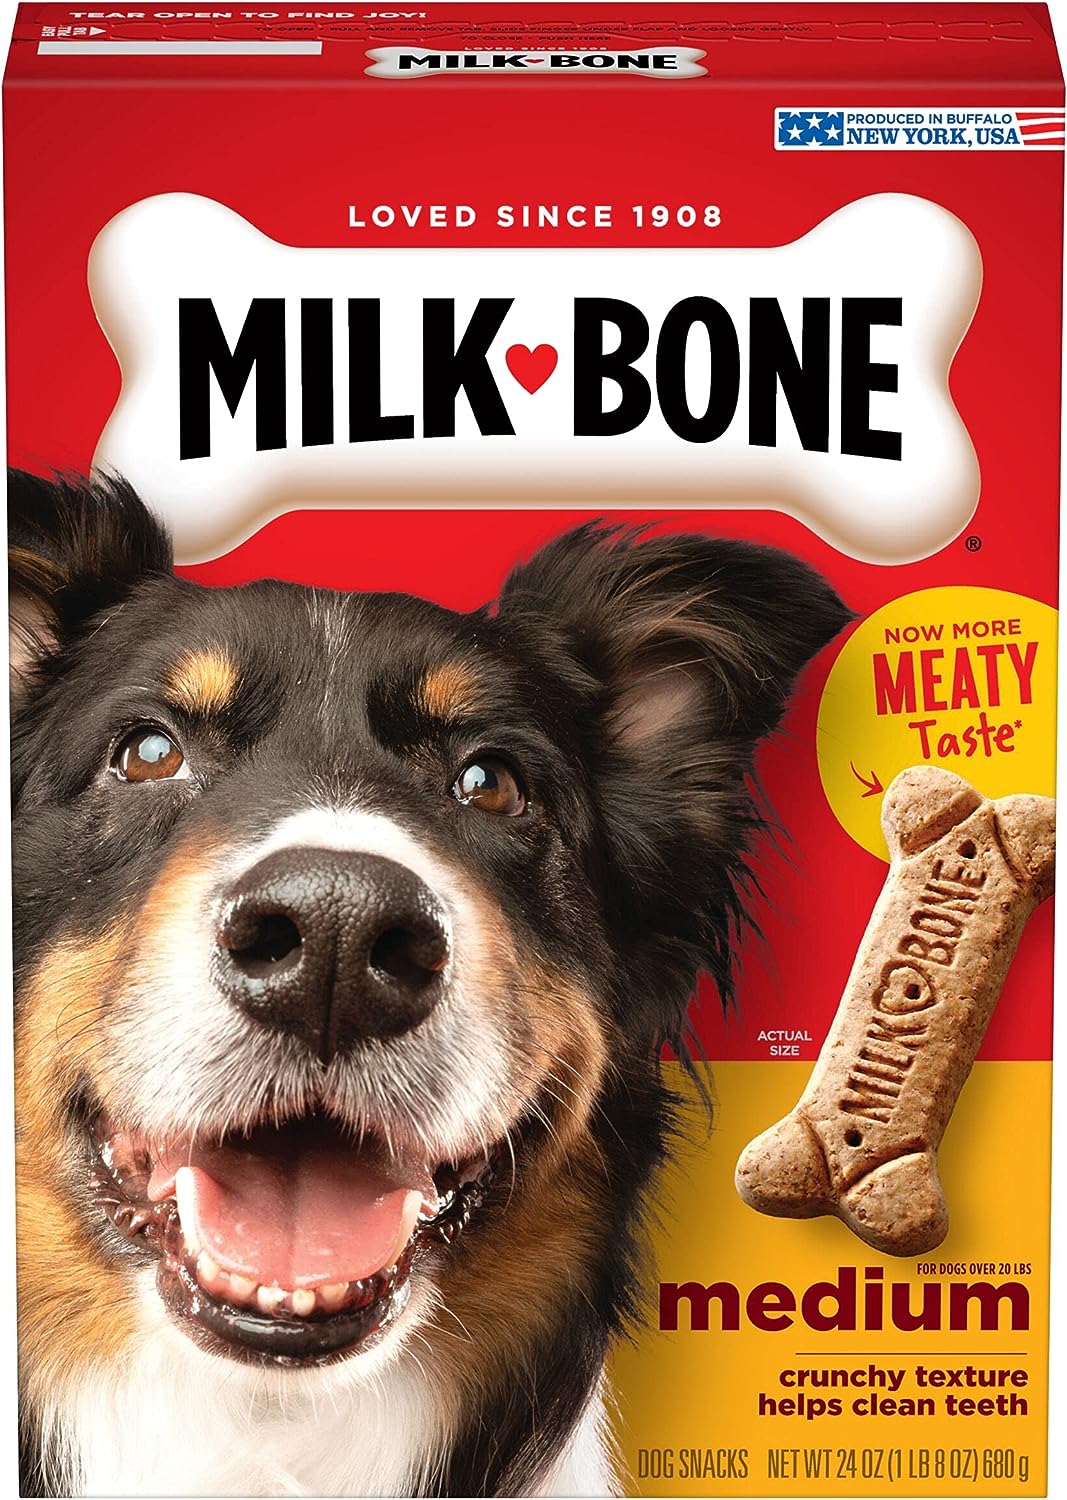 Milk-Bone Original Dog Treats for Medium Dogs, 24 Ounce, Crunchy Biscuit Helps Clean Teeth